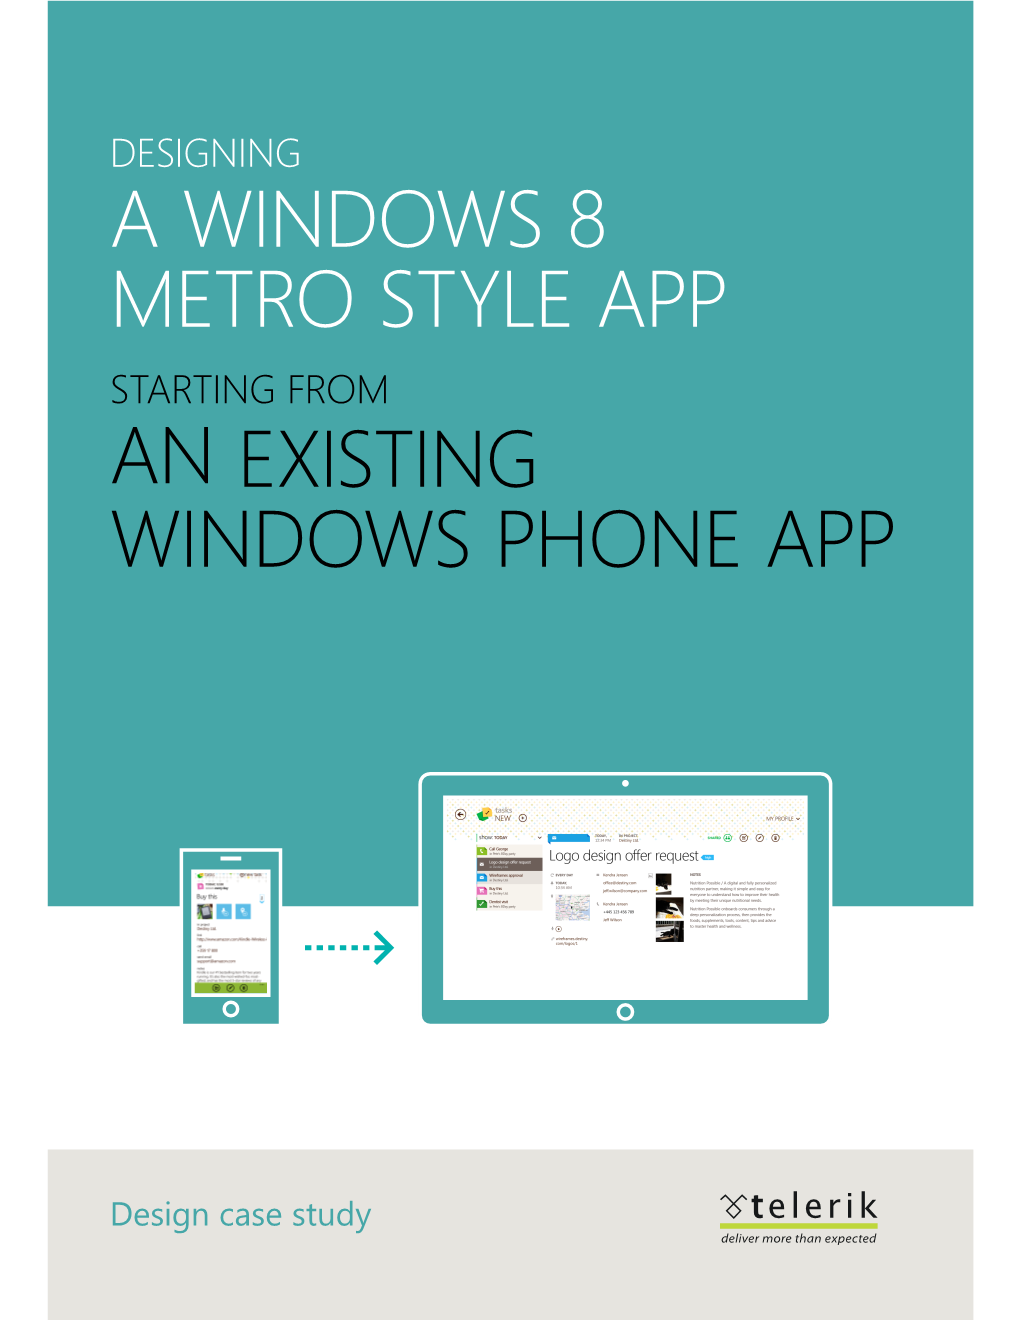 A Windows 8 Metro Style App an Existing Windows Phone